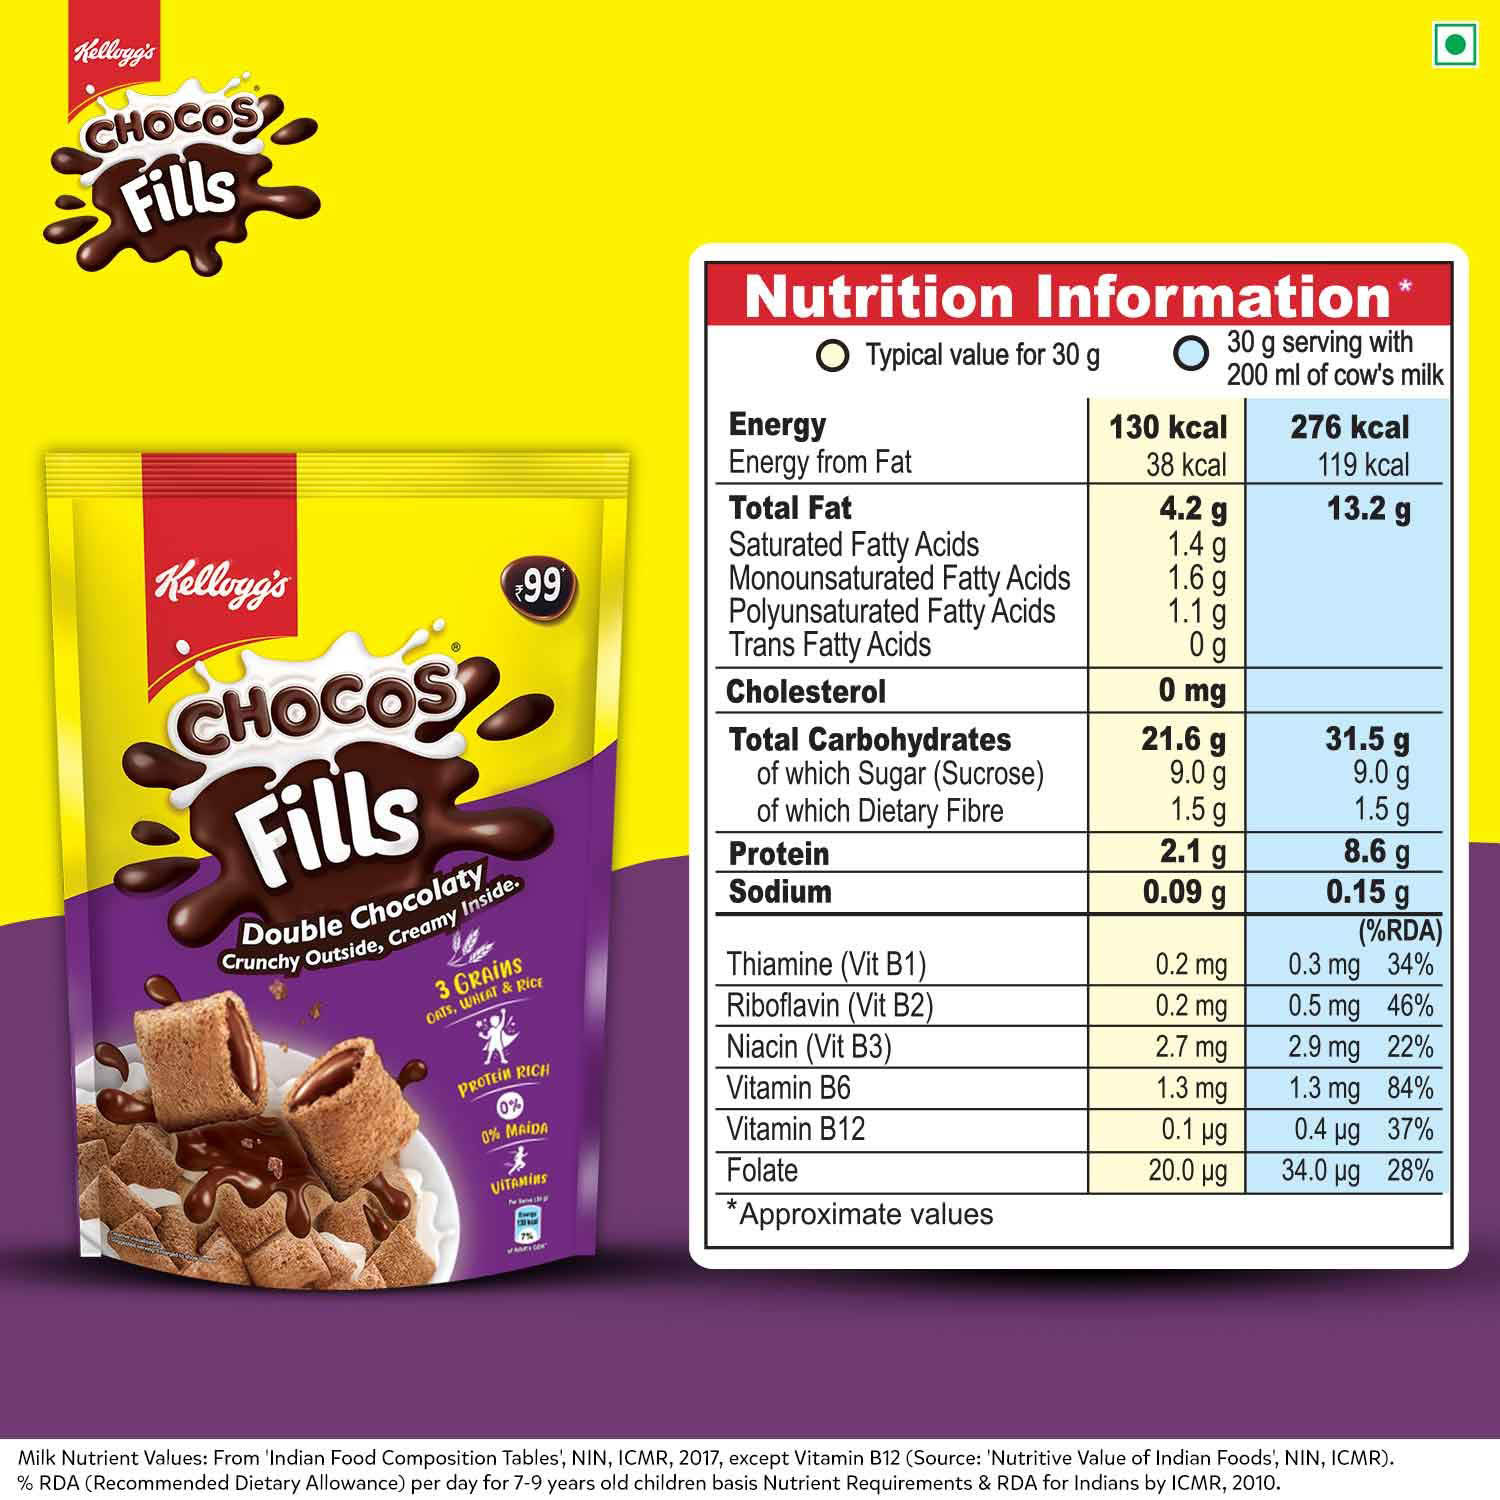 Buy Kellogg's Double Chocolaty Choco Fills, 175 gm Online